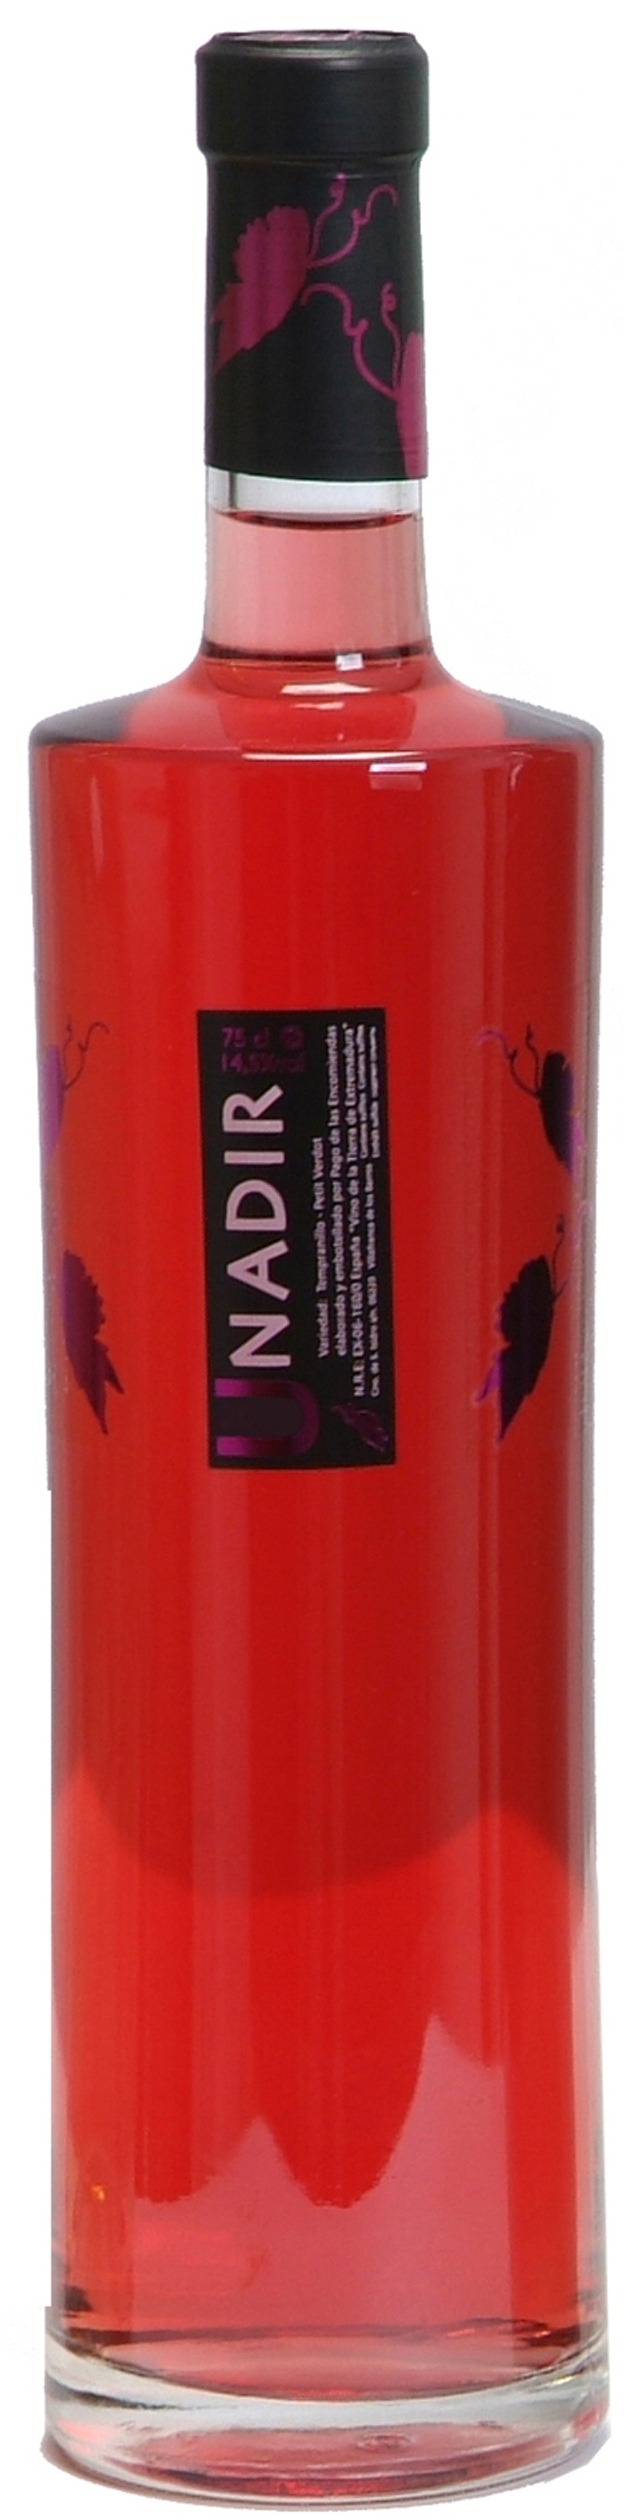 Image of Wine bottle Unadir Rosado